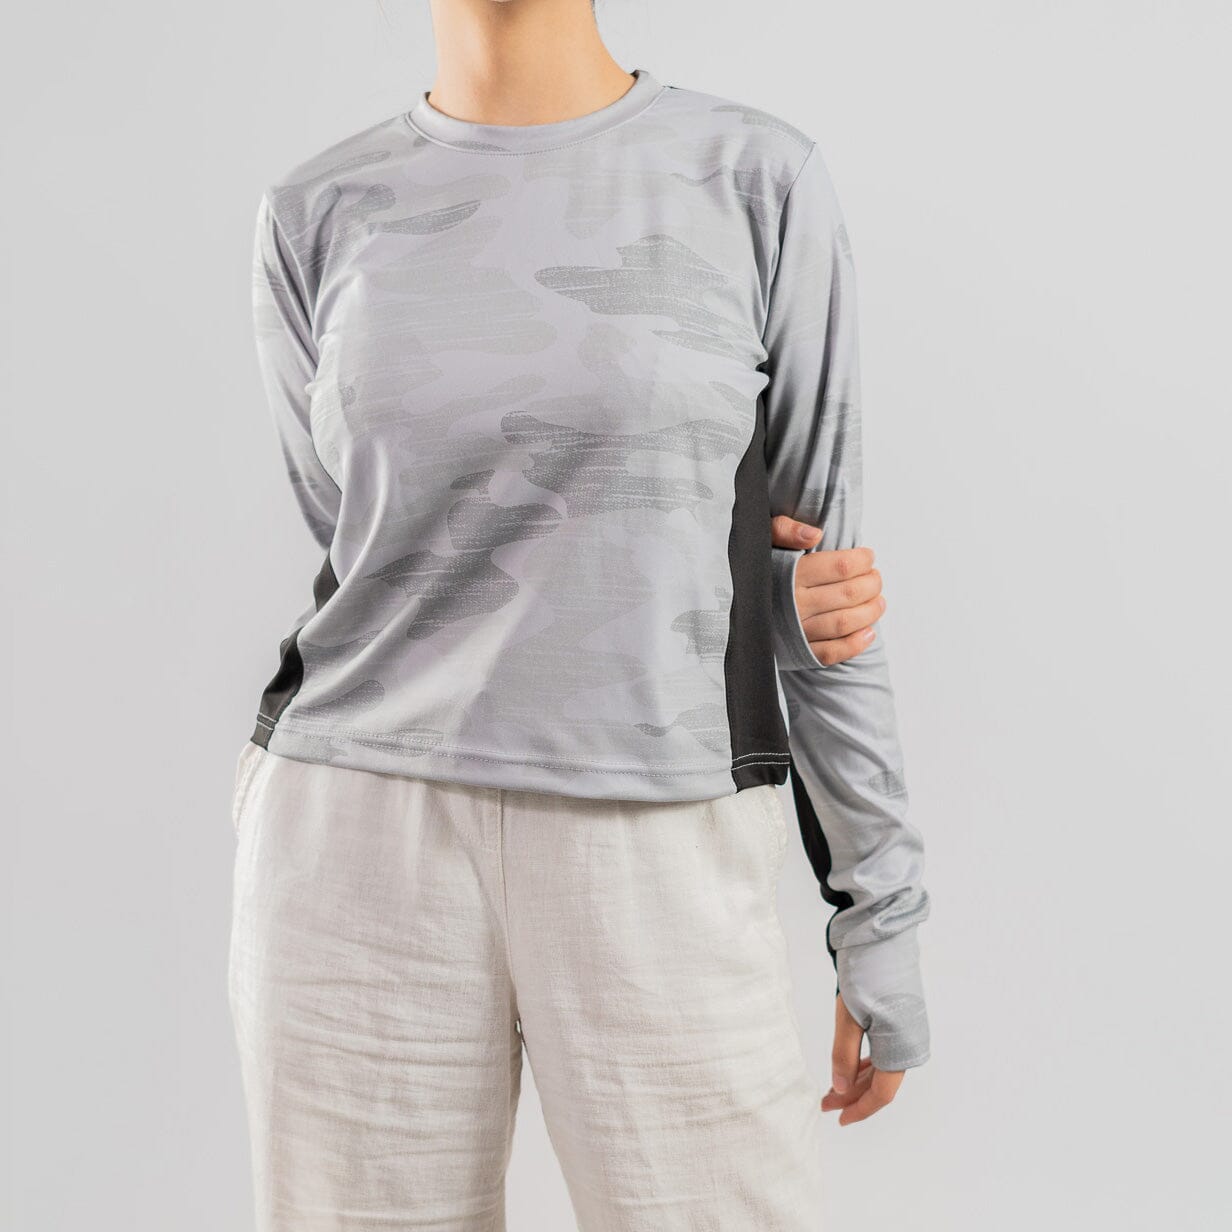 Polo Athletica Women's Contrast Panel Long Sleeve Activewear Crop Tee Shirt Women's Tee Shirt Polo Republica Grey & Black XS 